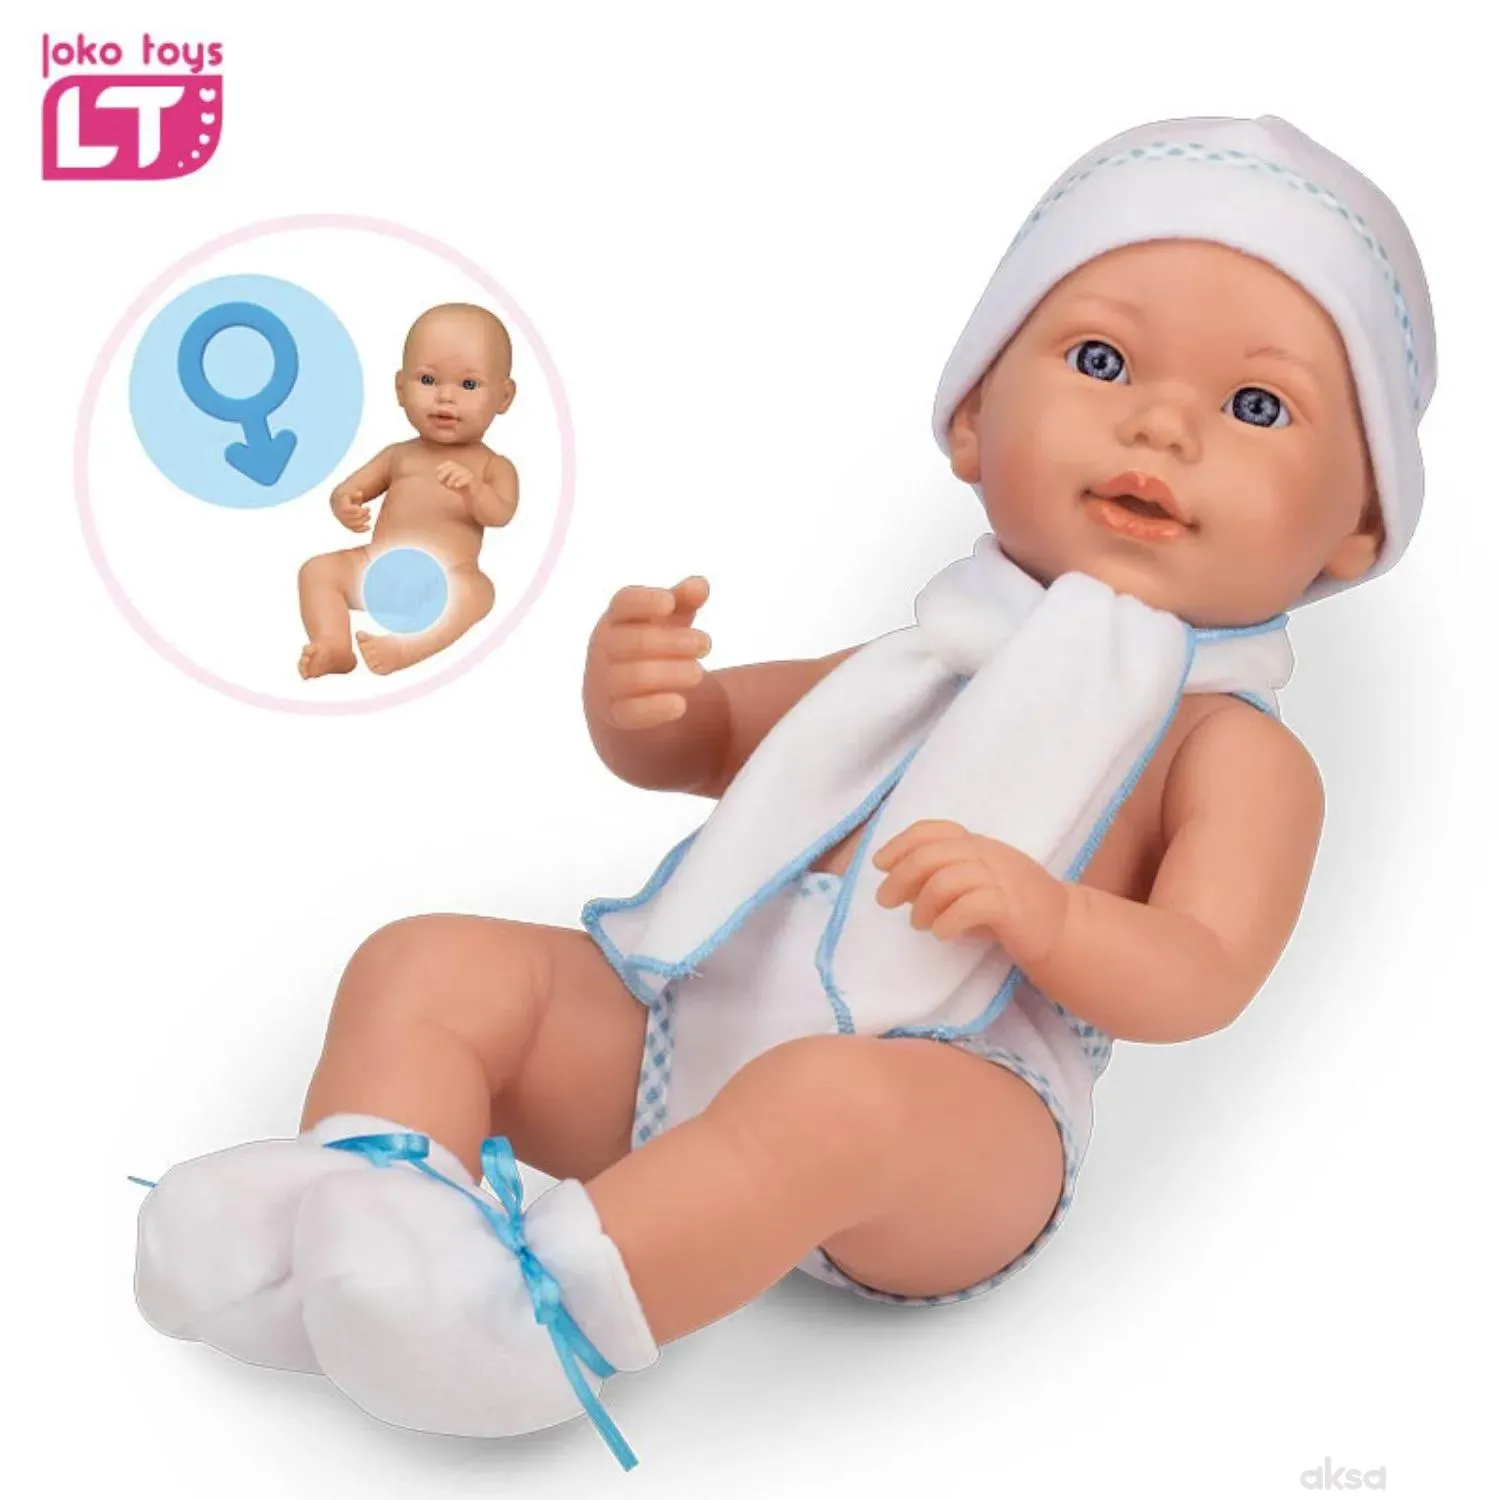 Loko toys, lutka beba dječak, 42cm 